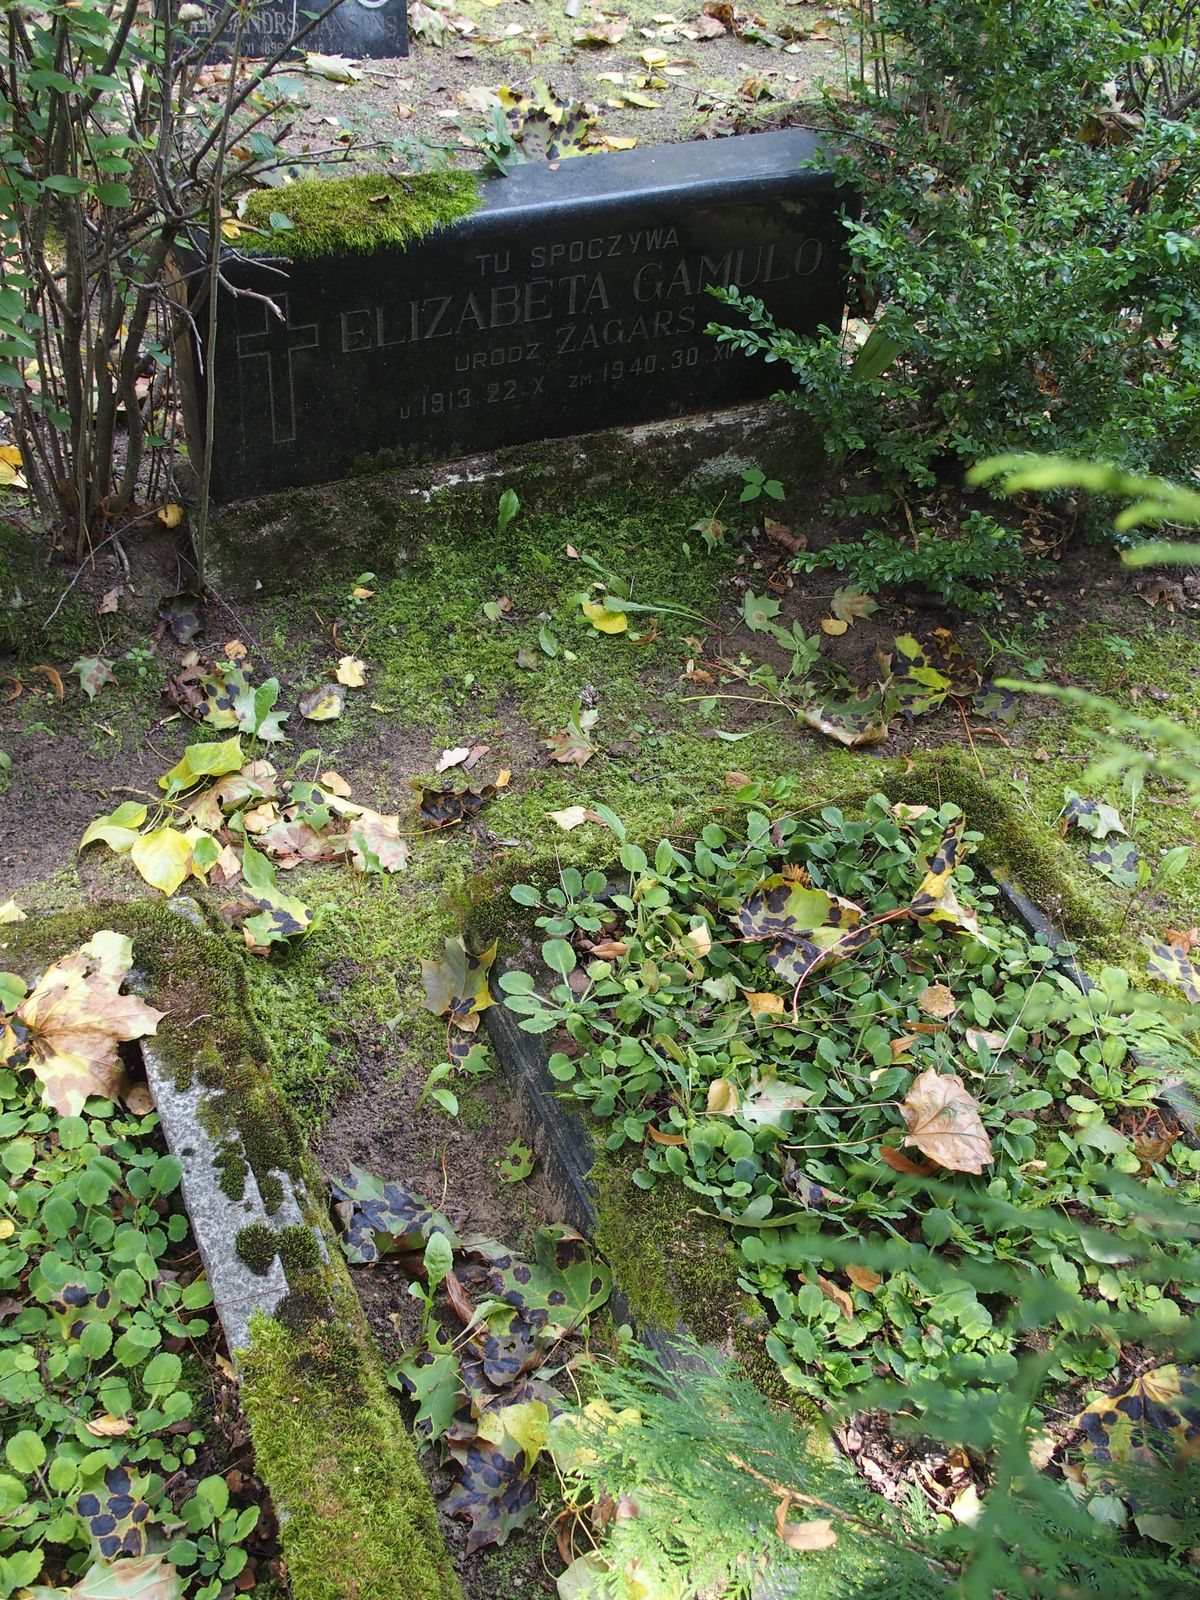 Tombstone of Elizabeta Gamulo, St. Michael's cemetery in Riga, as of 2021